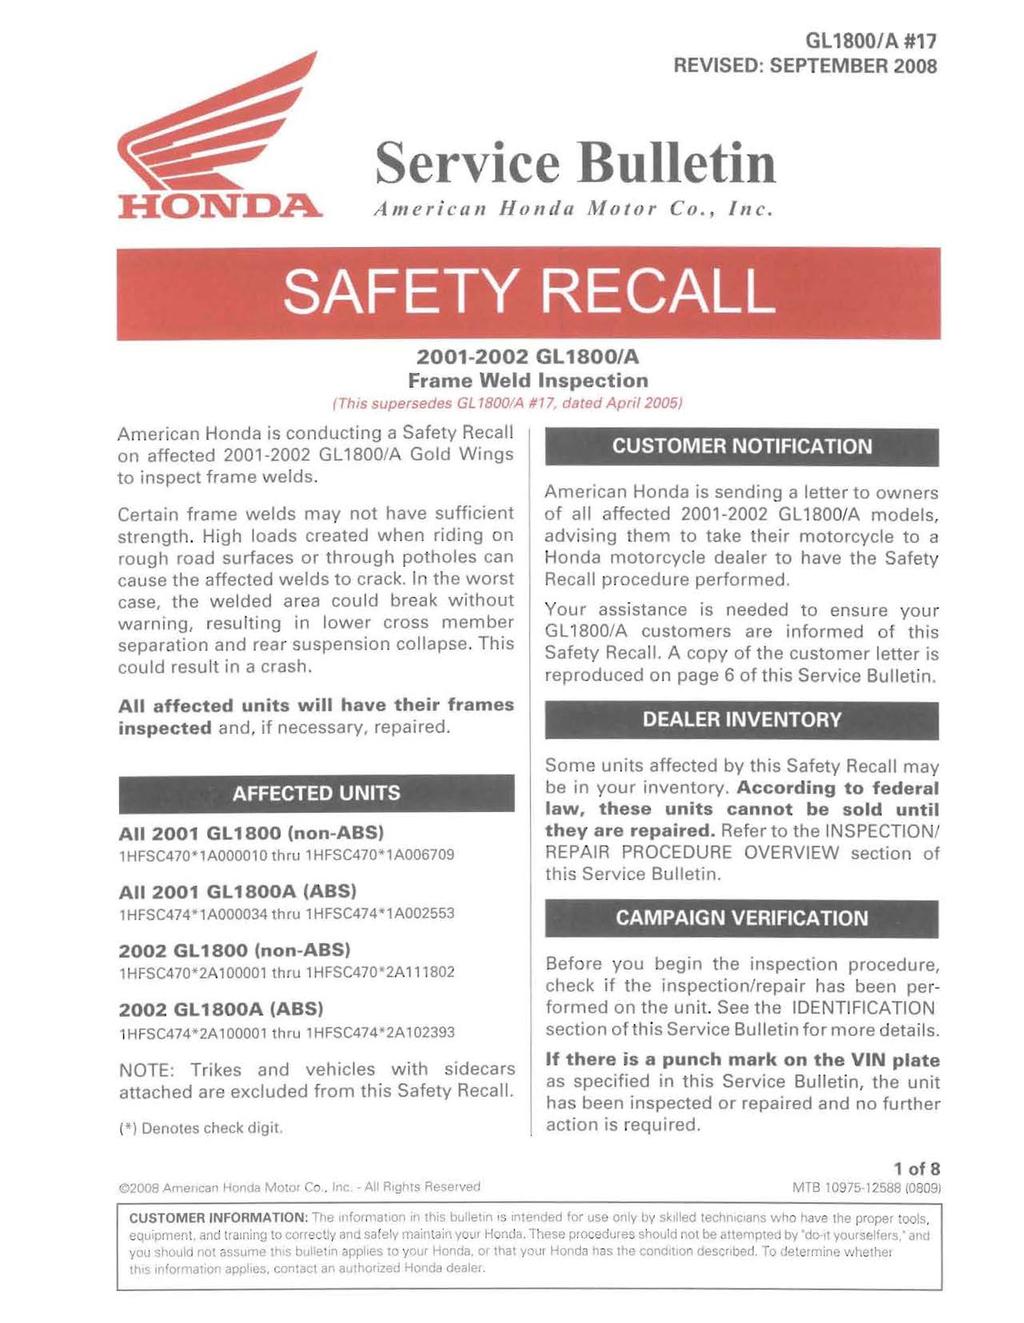 Service Bulletin American Honda Motor Co., Inc.